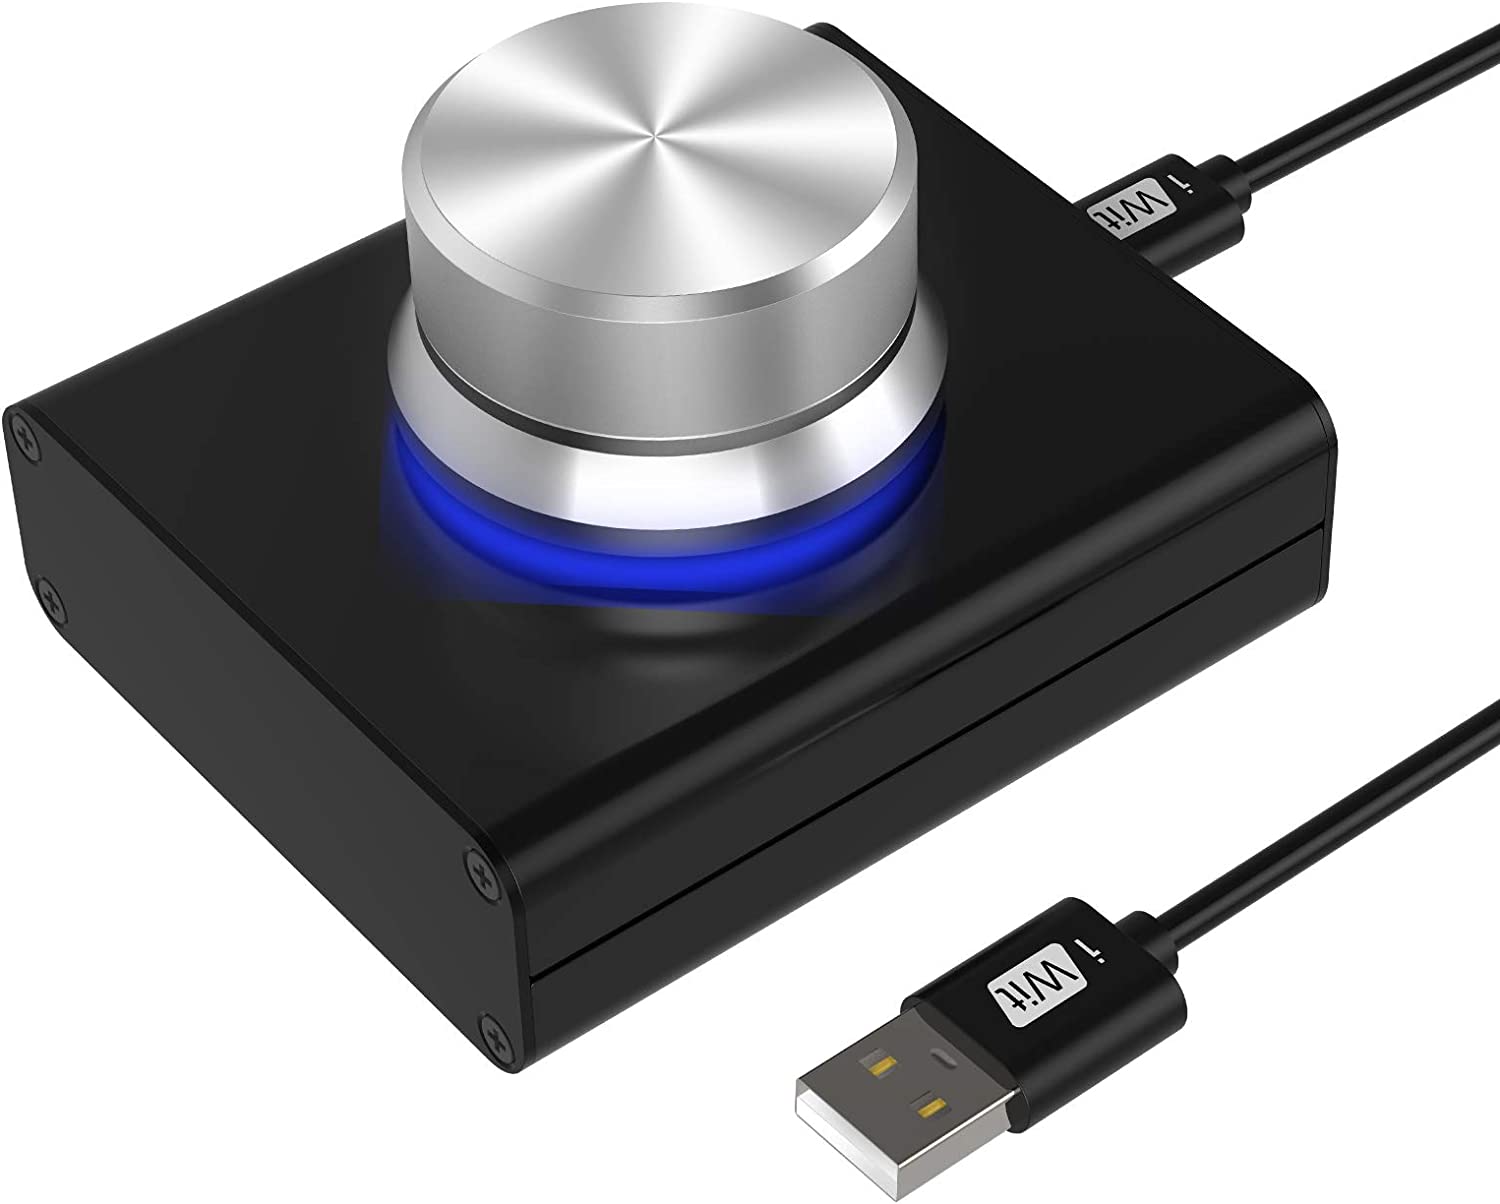 USB volume control knob